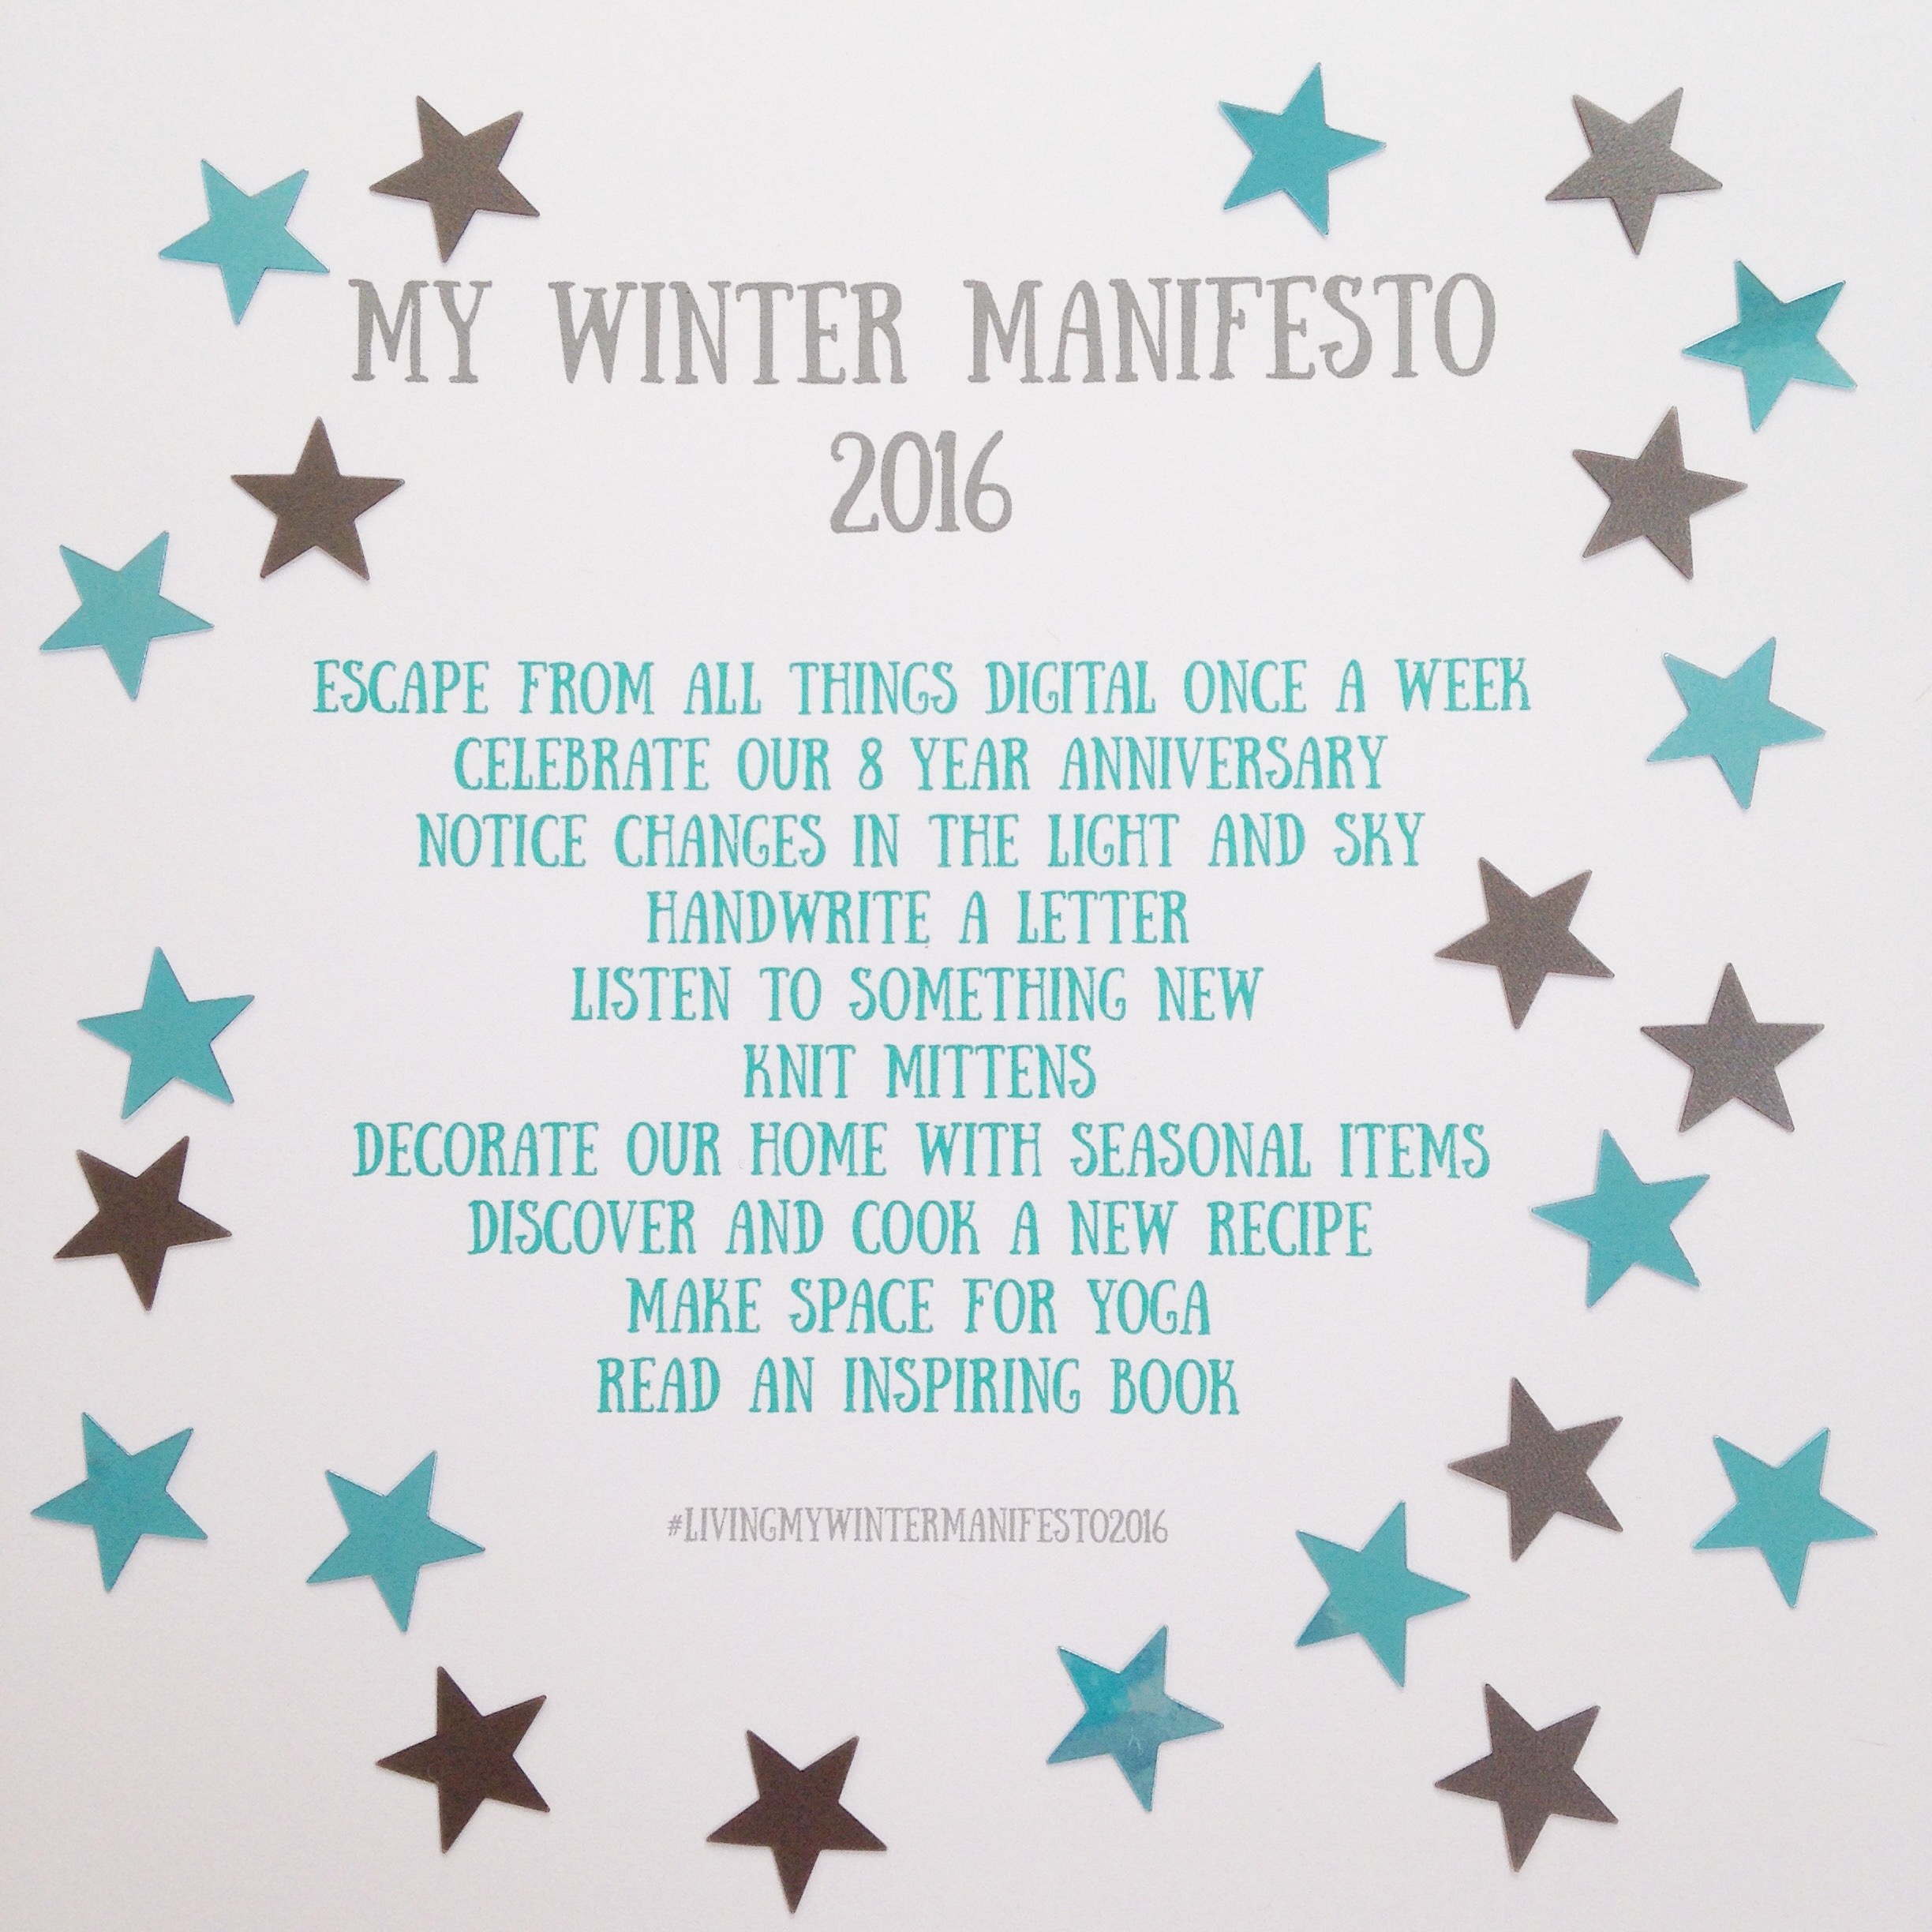 My Winter Manifesto